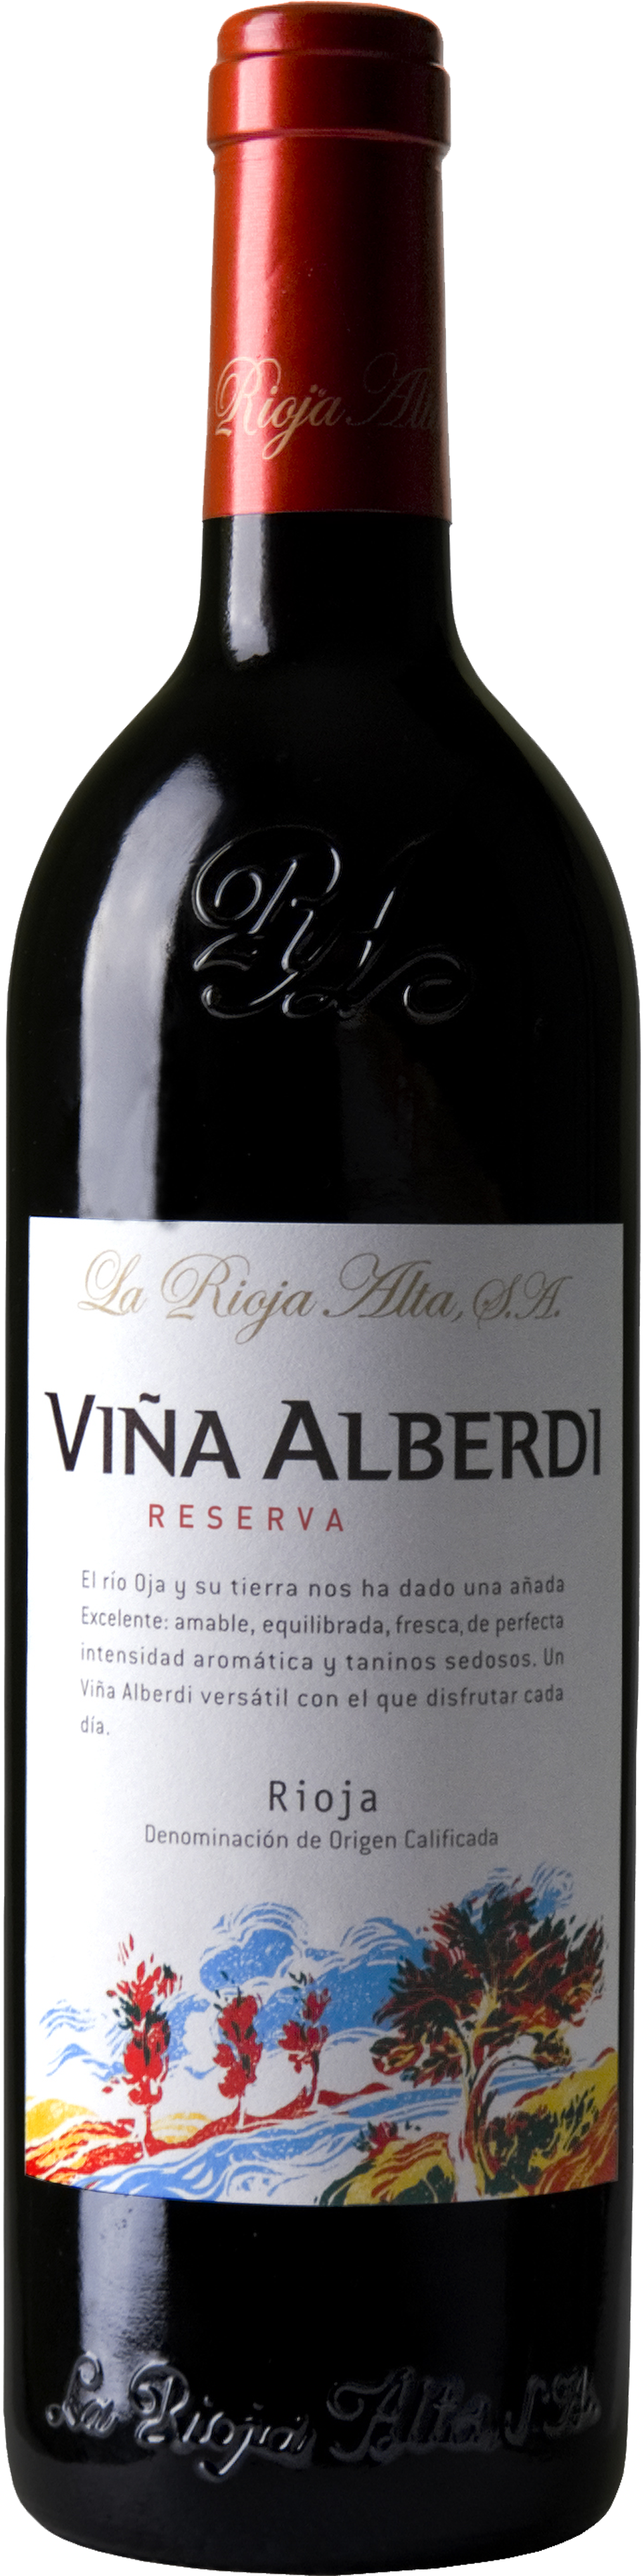 Bottle shot of 2007 Viña Alberdi Reserva